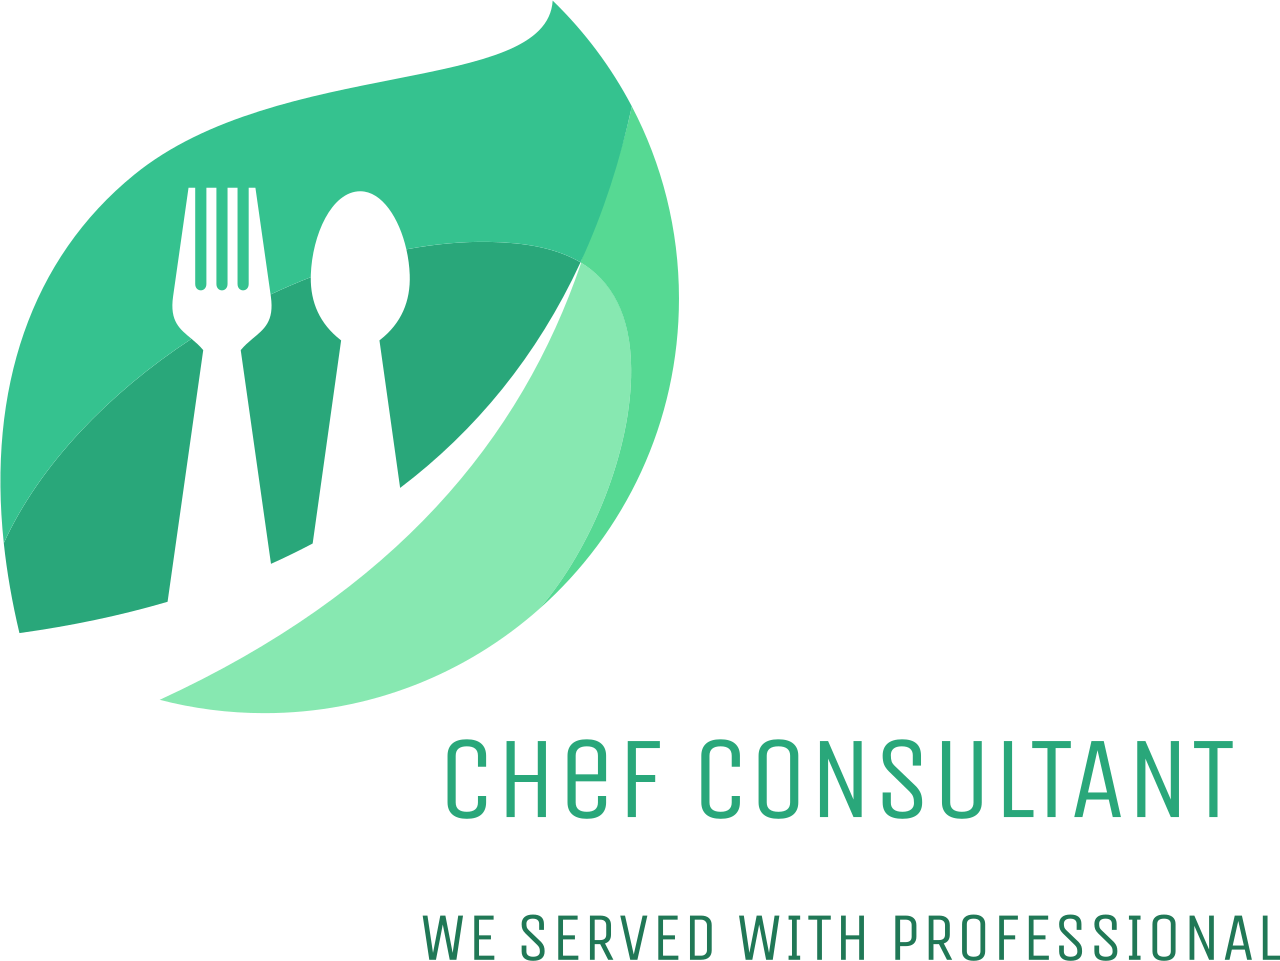 Chef CONSULTANT 's logo